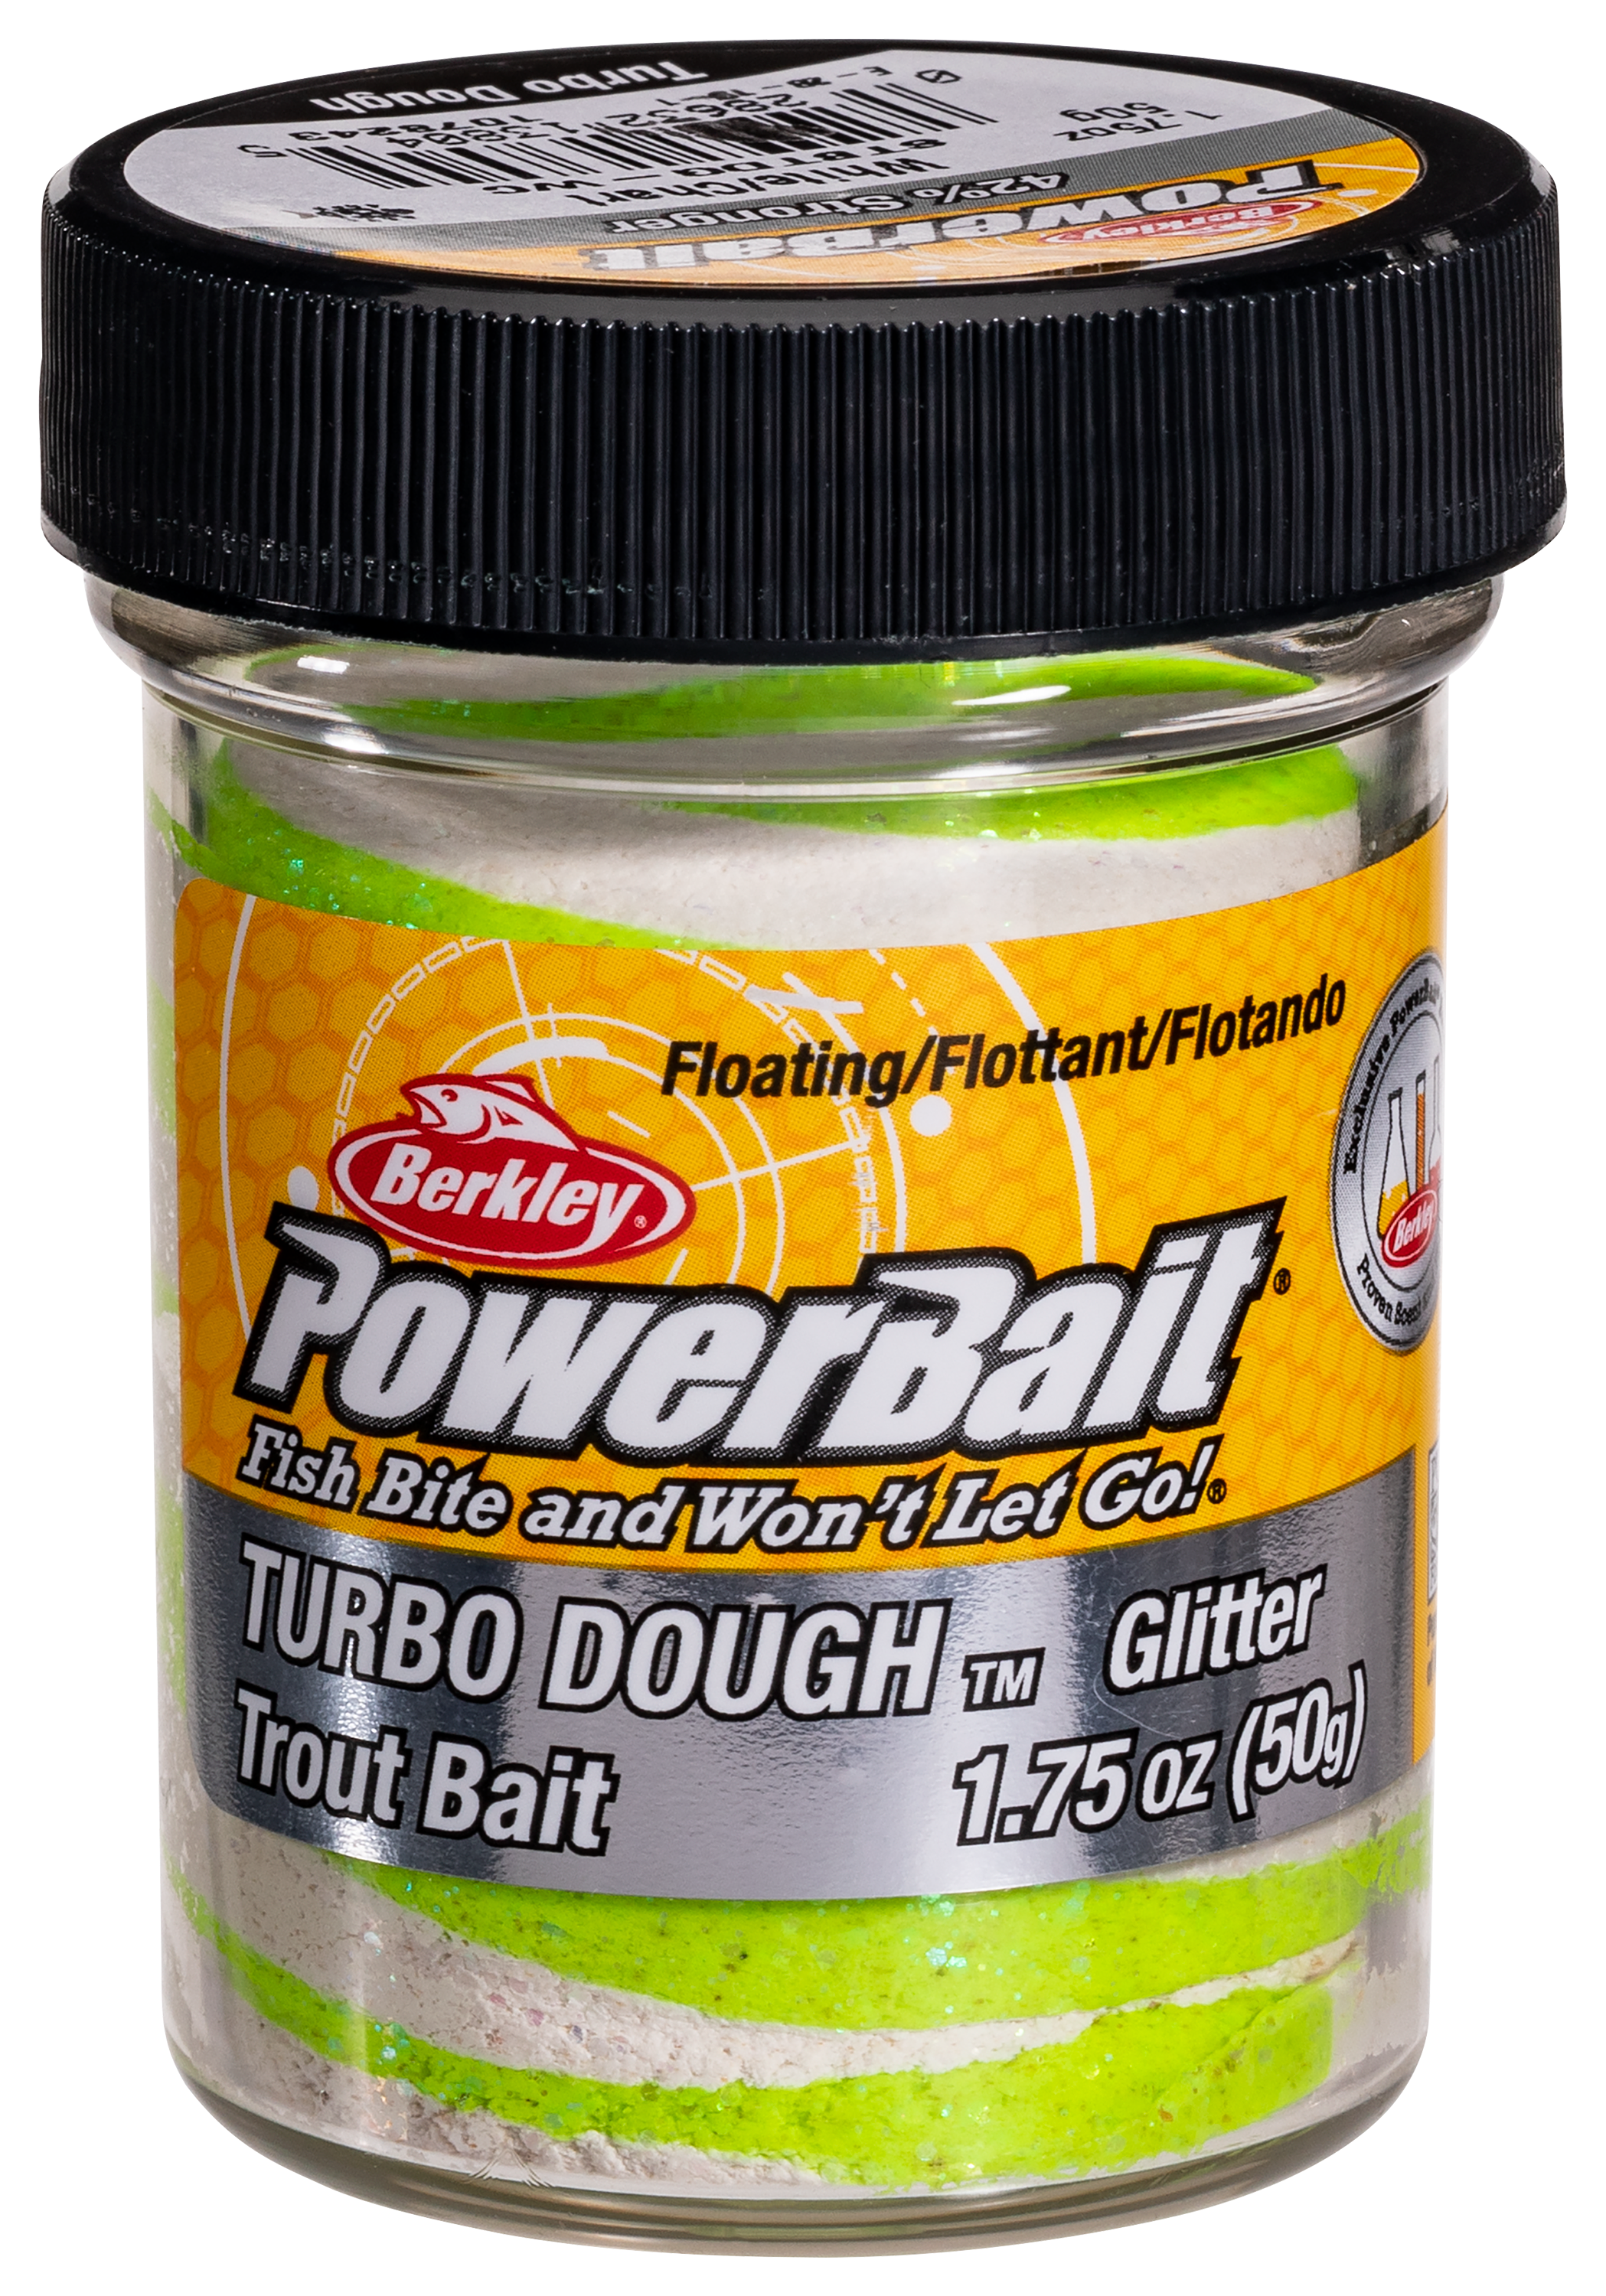 Berkley Powerbait Glitter Trout Bait, White, 1.75-Ounce, Attractants -   Canada